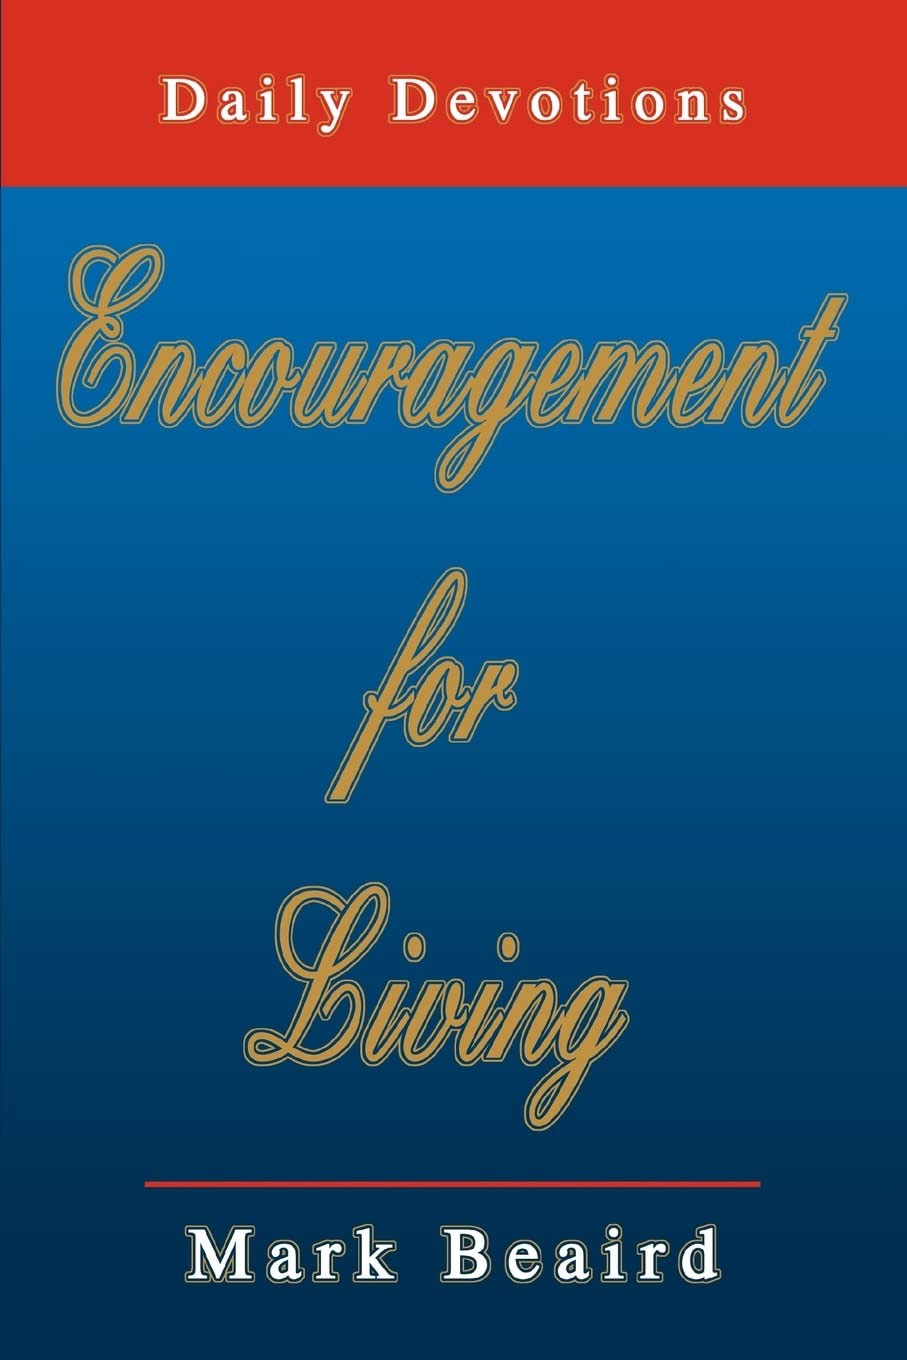 Encouragement For Living